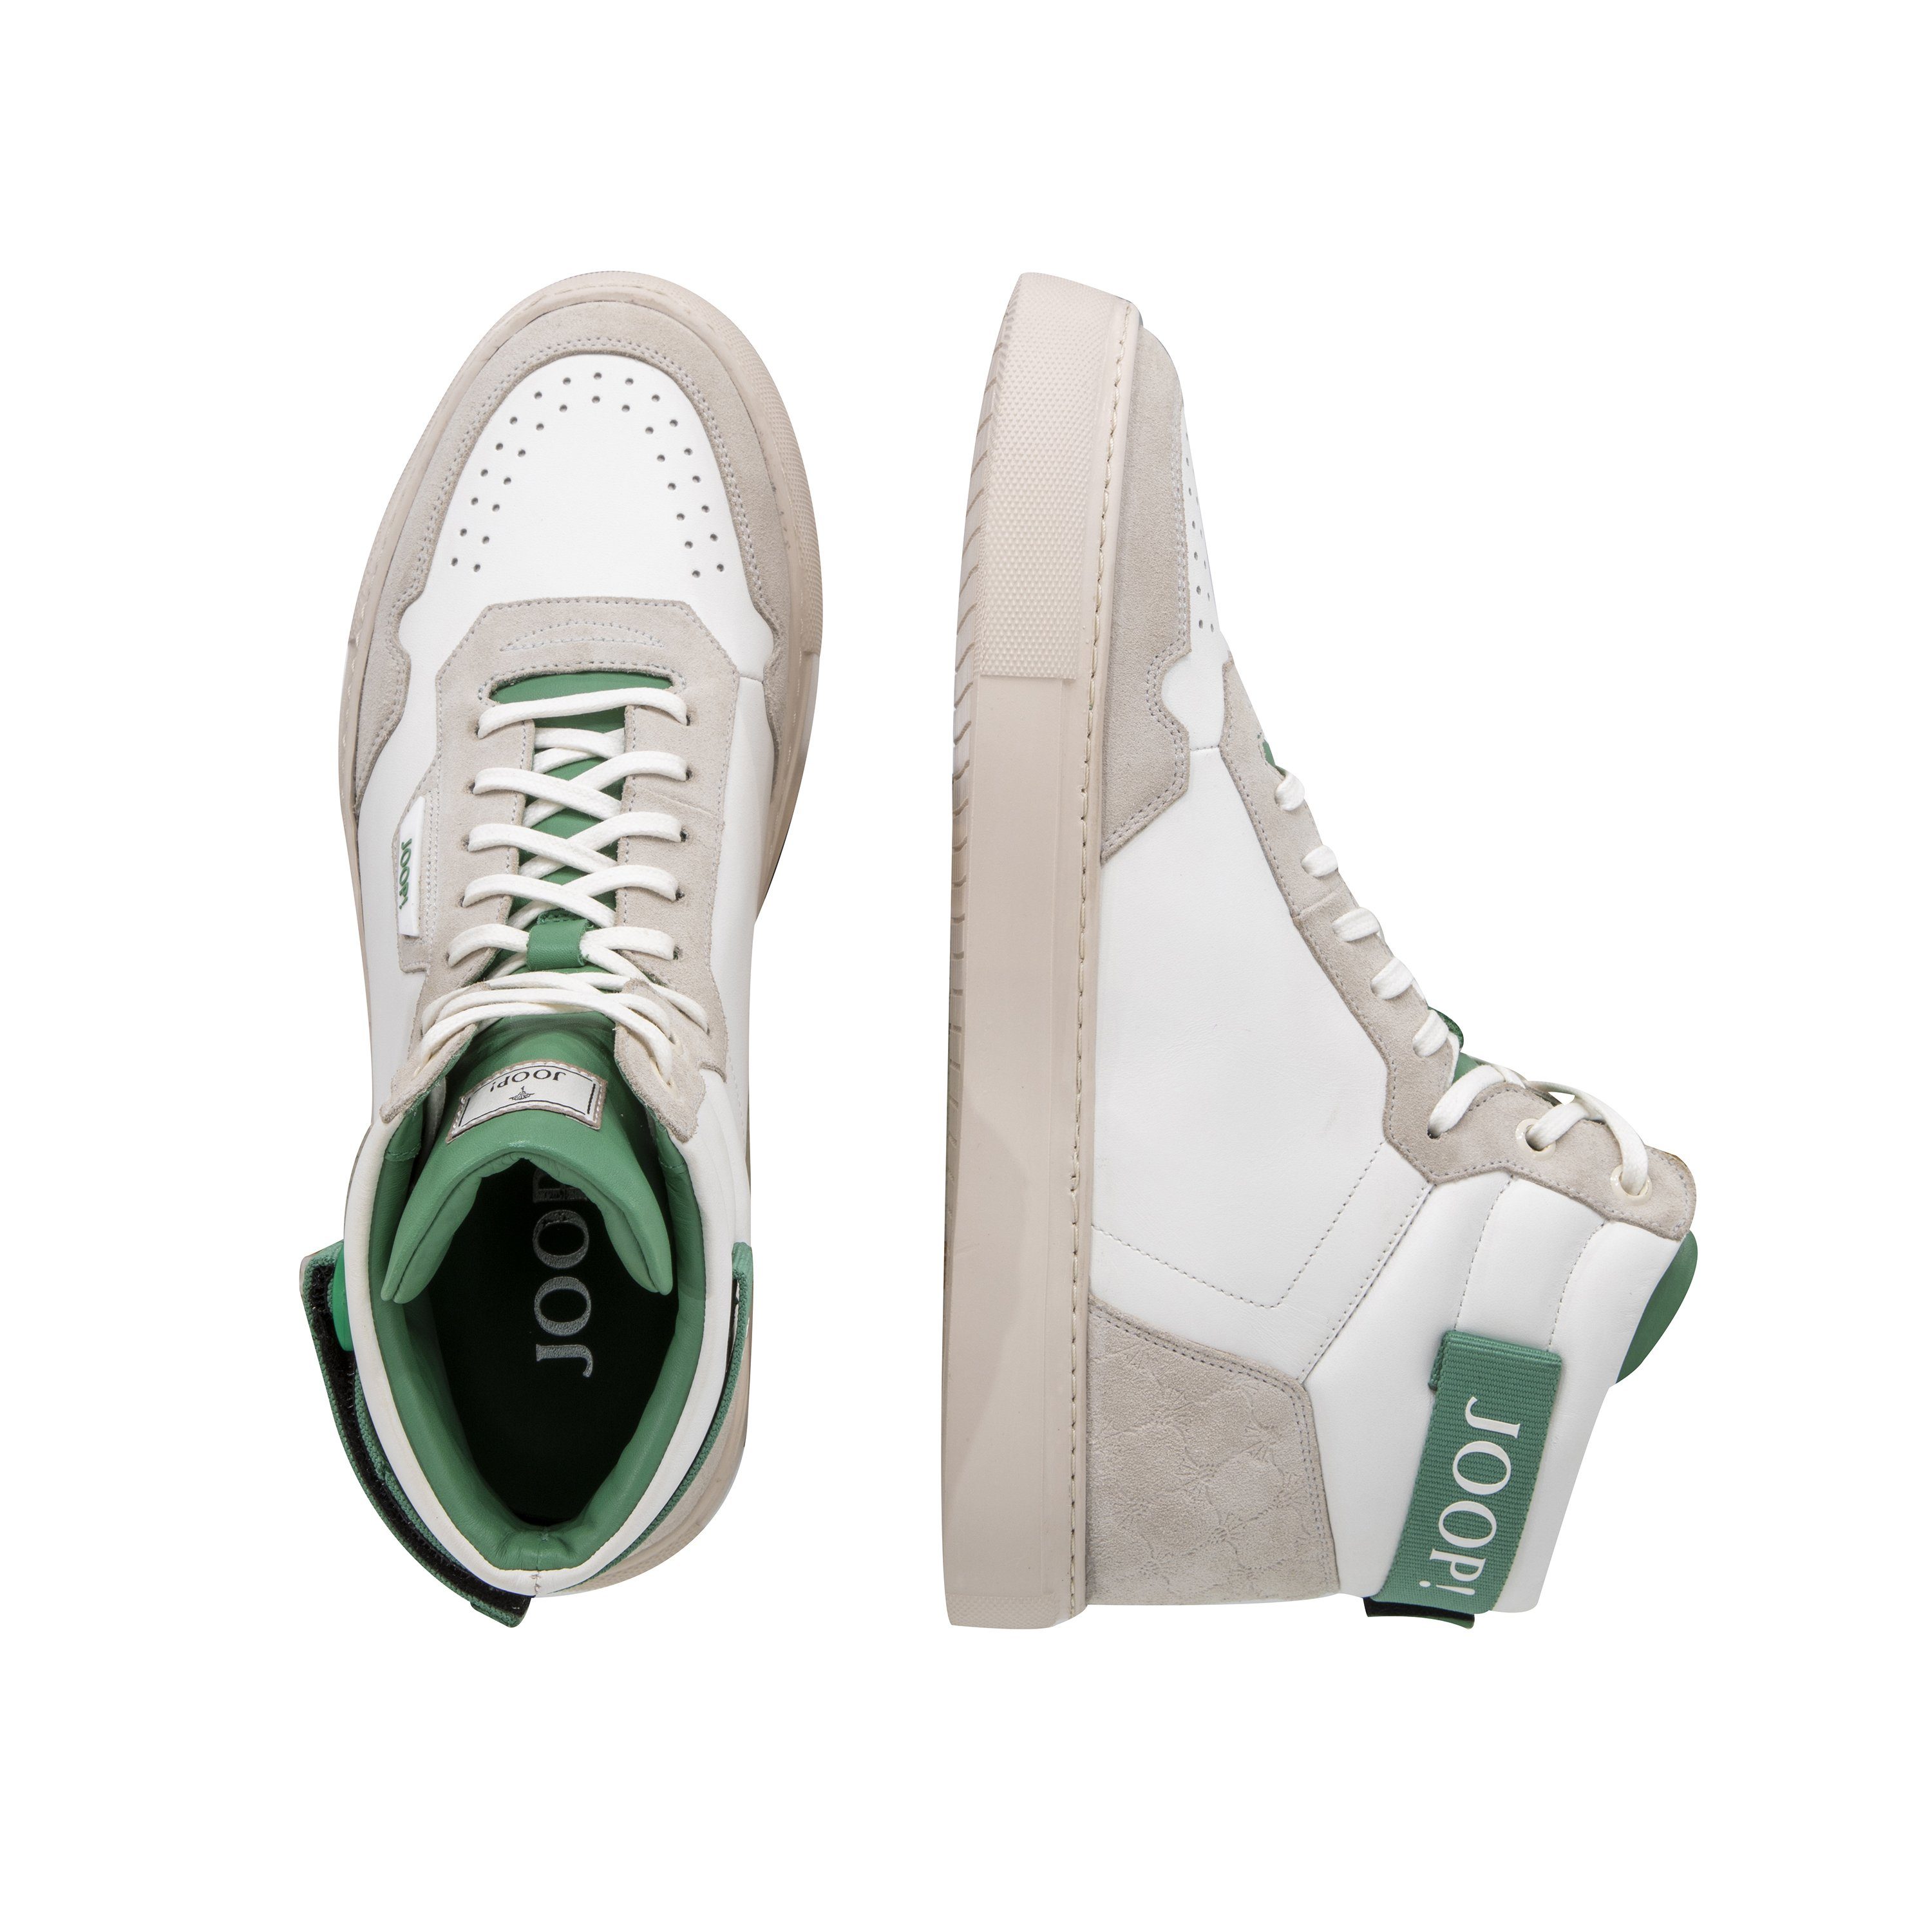 Joop! Sneaker green